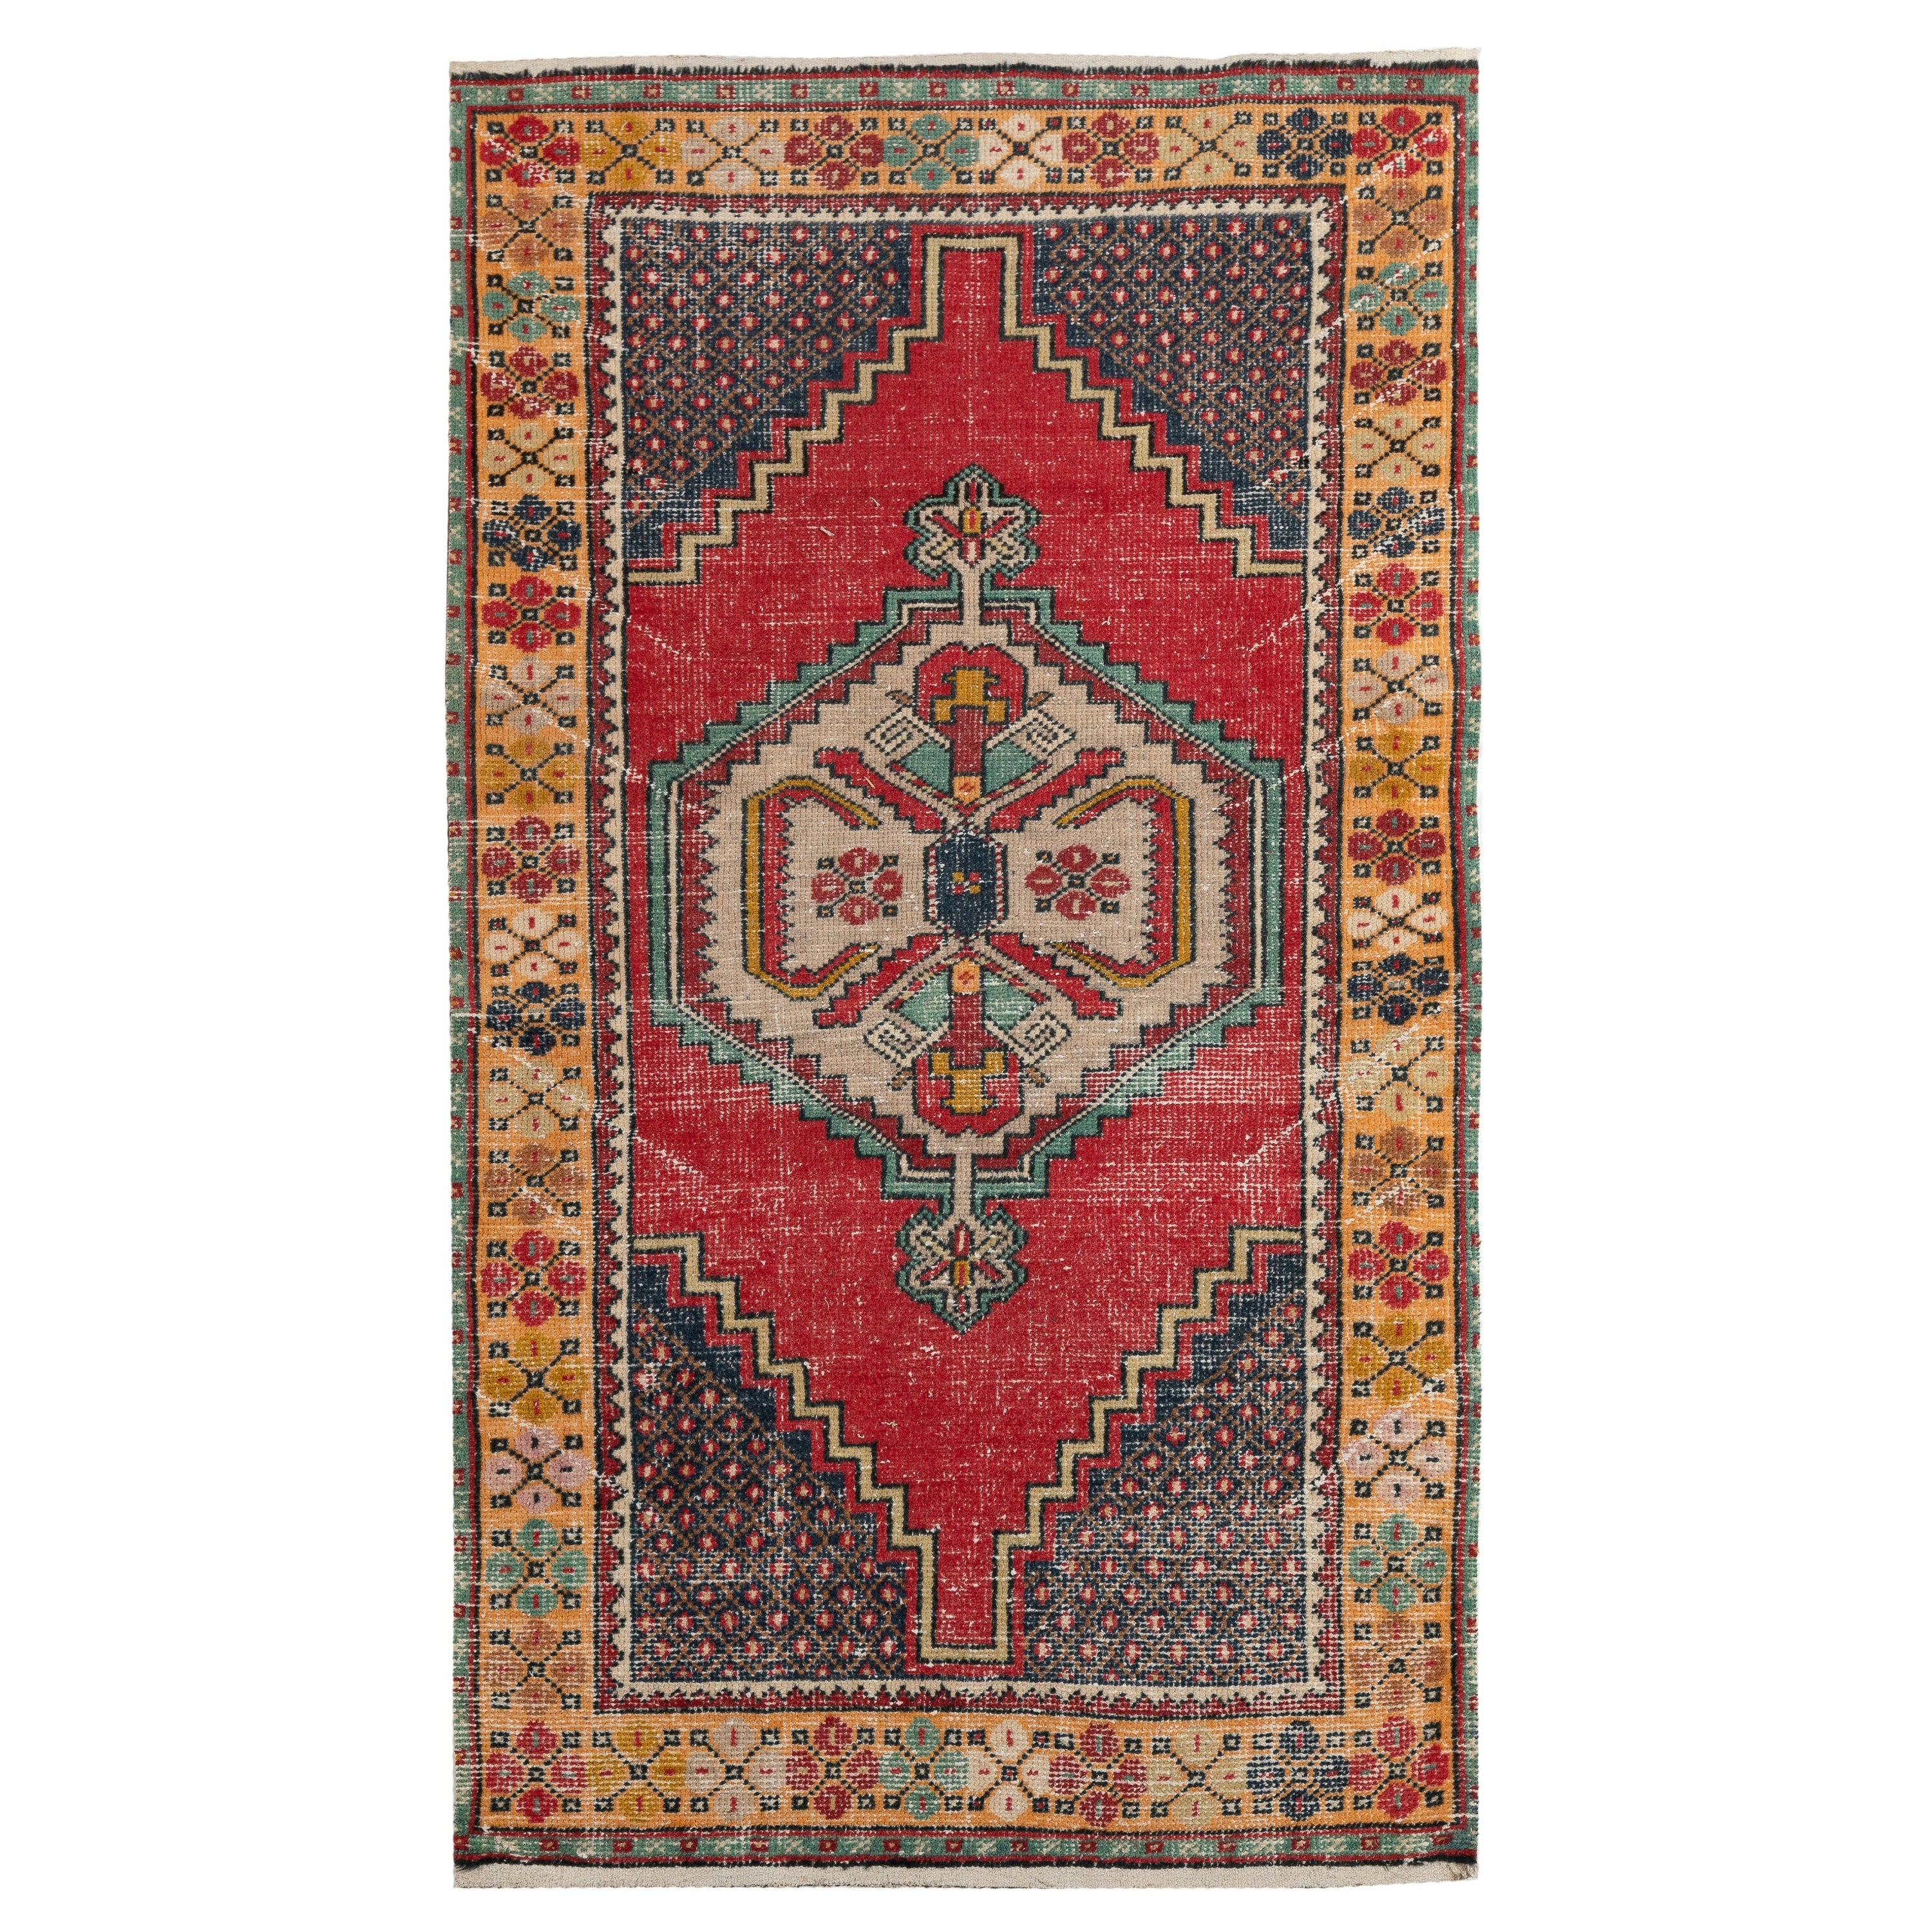 3.6x6 Ft Vintage Handmade Turkish Wool Oriental Rug in Vibrant & Warm Colors For Sale